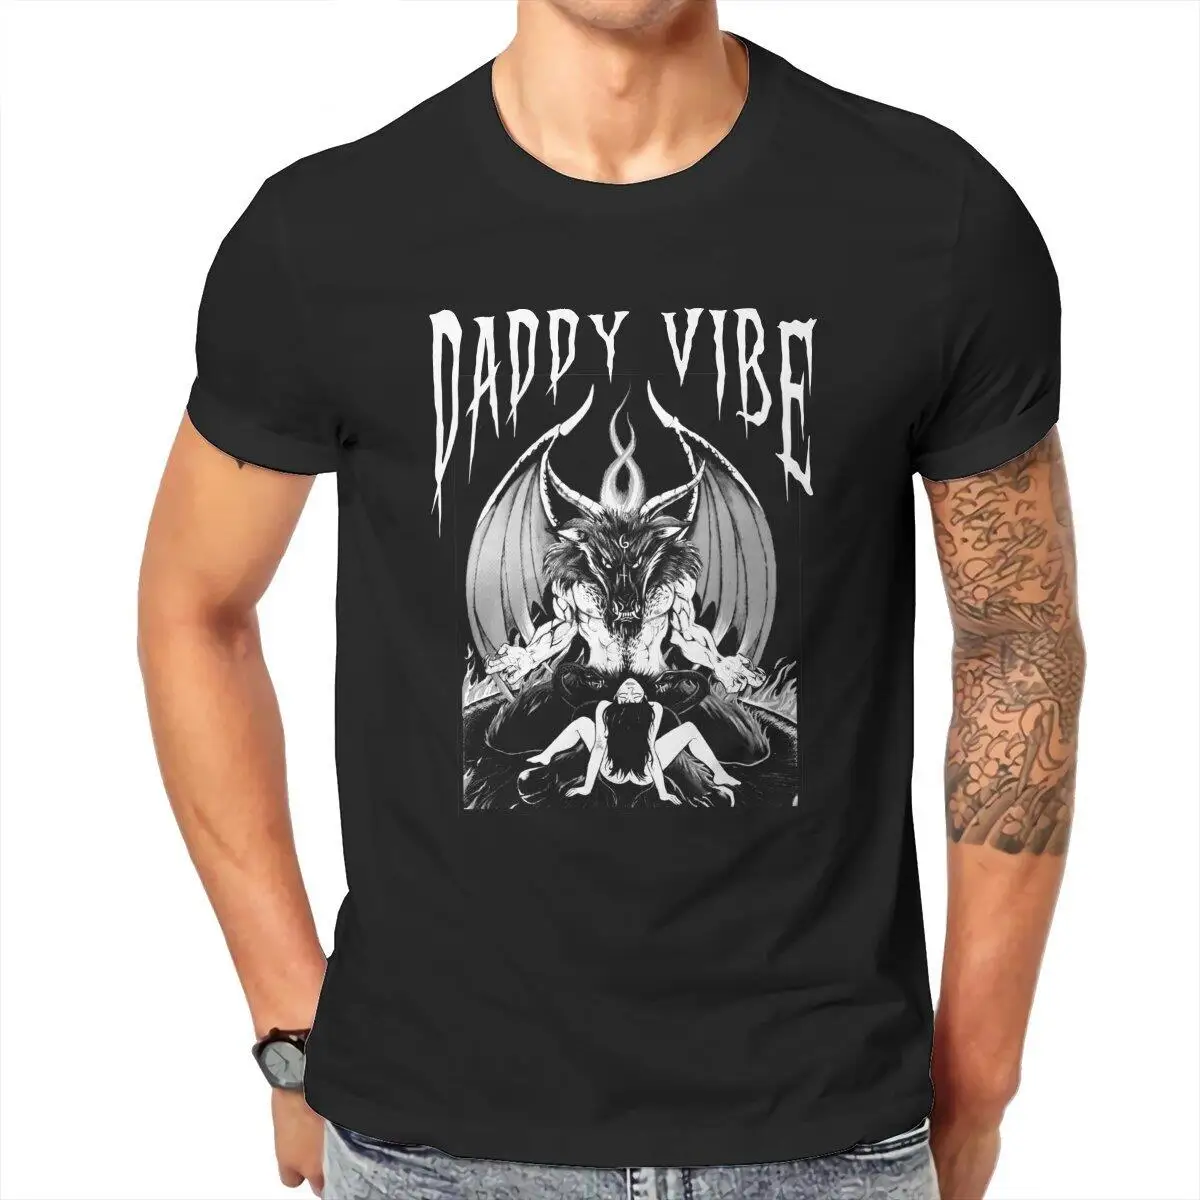 Vintage DADDY VIBE  T-Shirts for Men Round Collar 100% Cotton T Shirt Satan Metal Baphomet Short Sleeve Tee Shirt Party Clothing